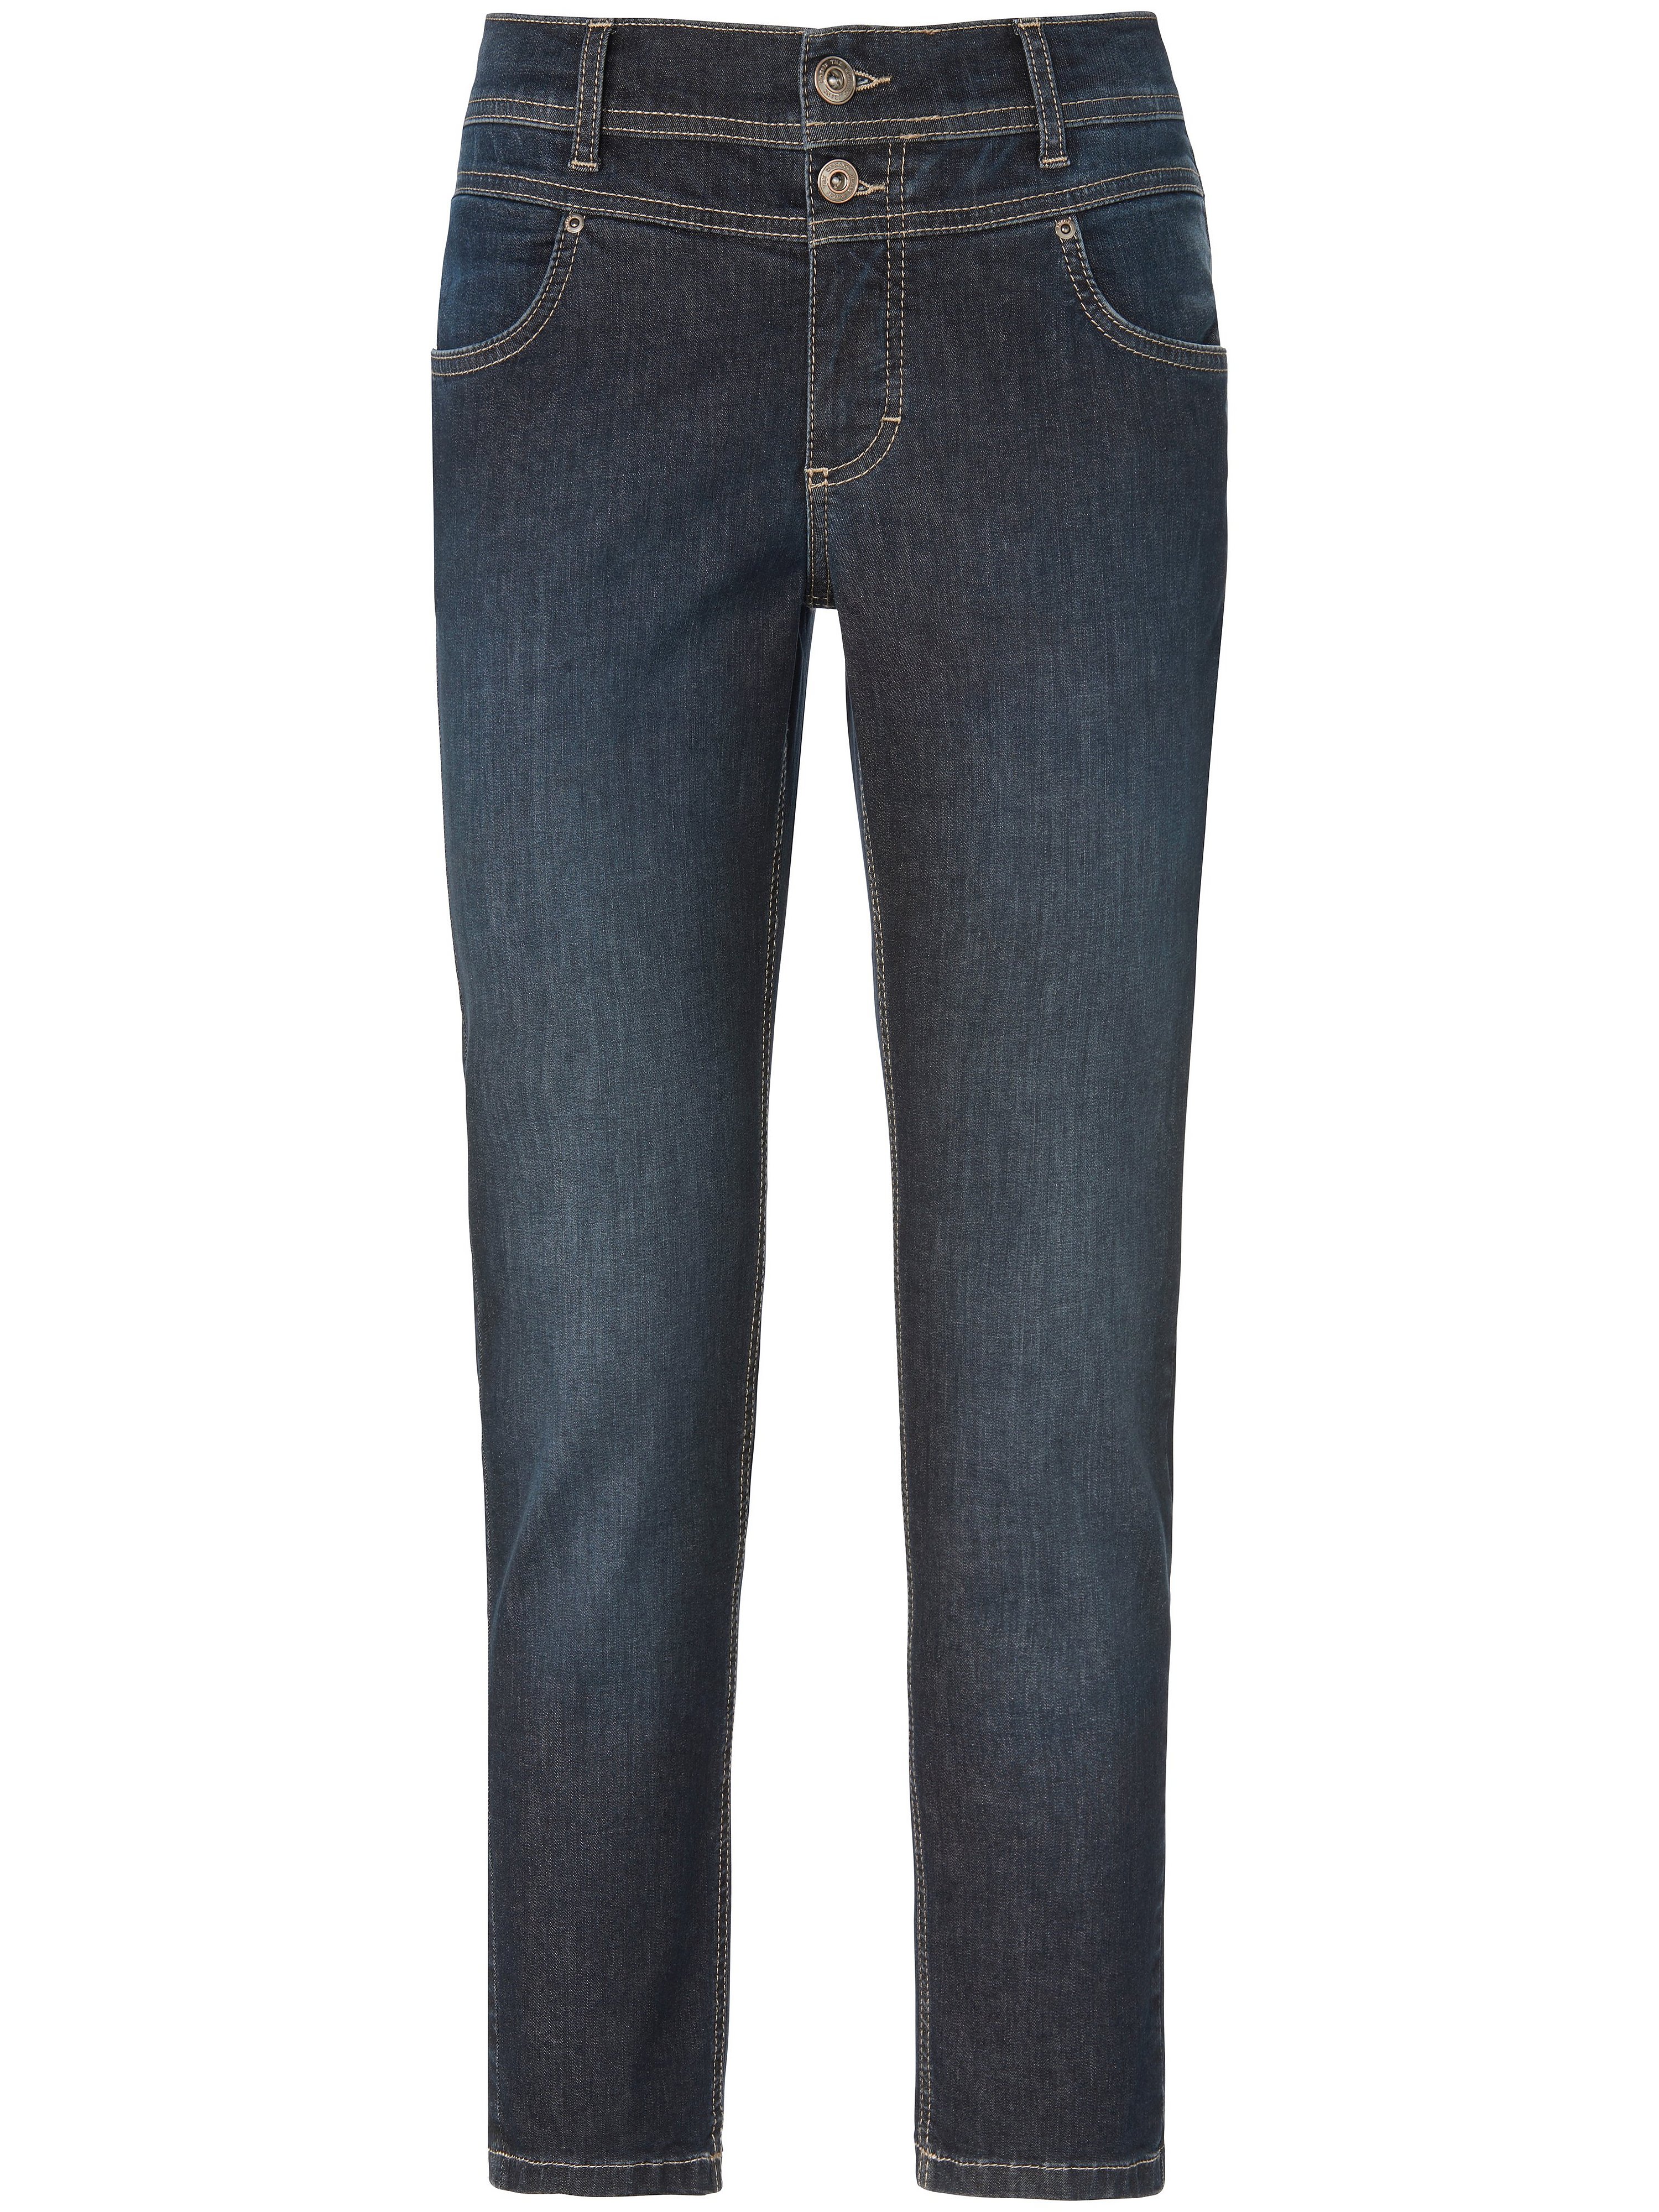 Enkellange skinny jeans model Ornella Button Van ANGELS denim